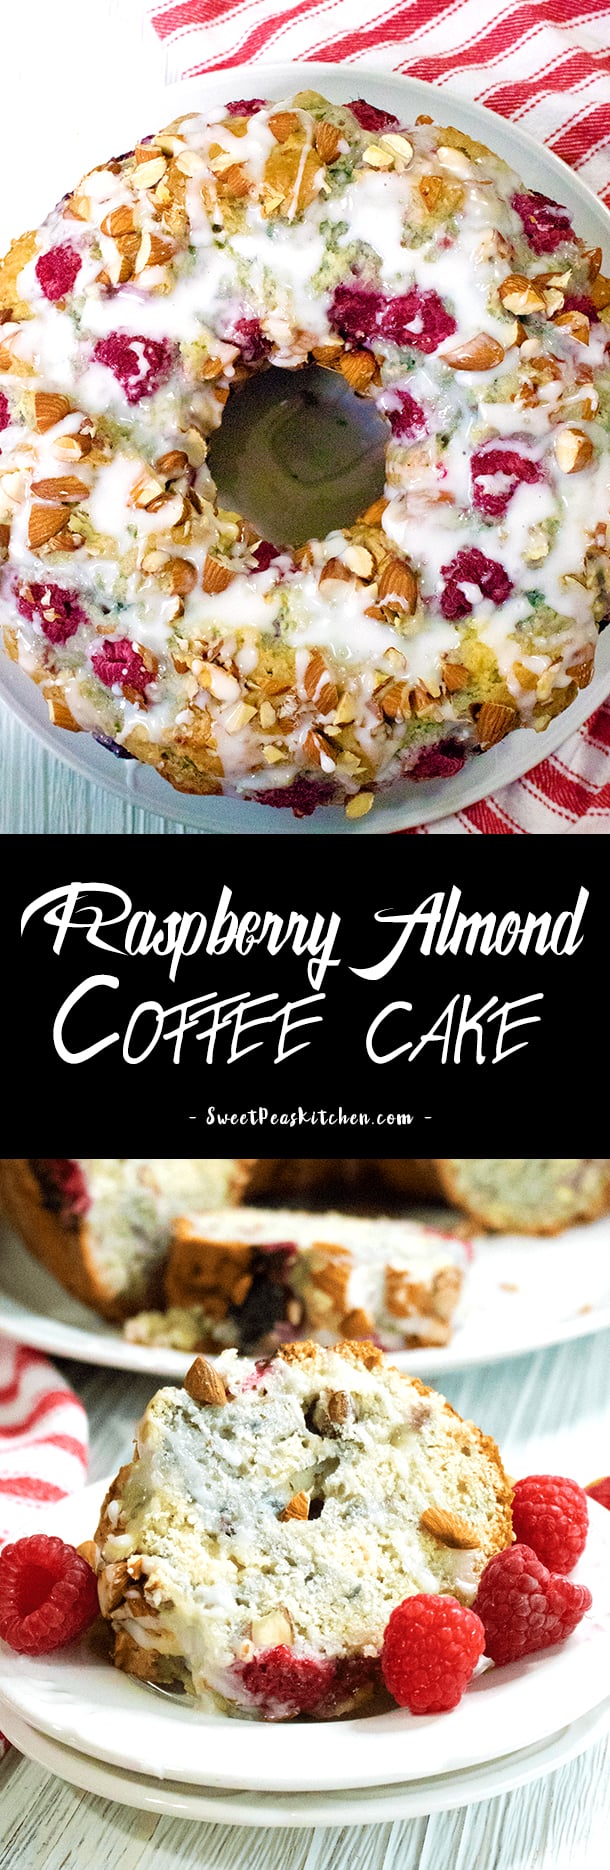 Raspberry Coffee Cake with Almonds